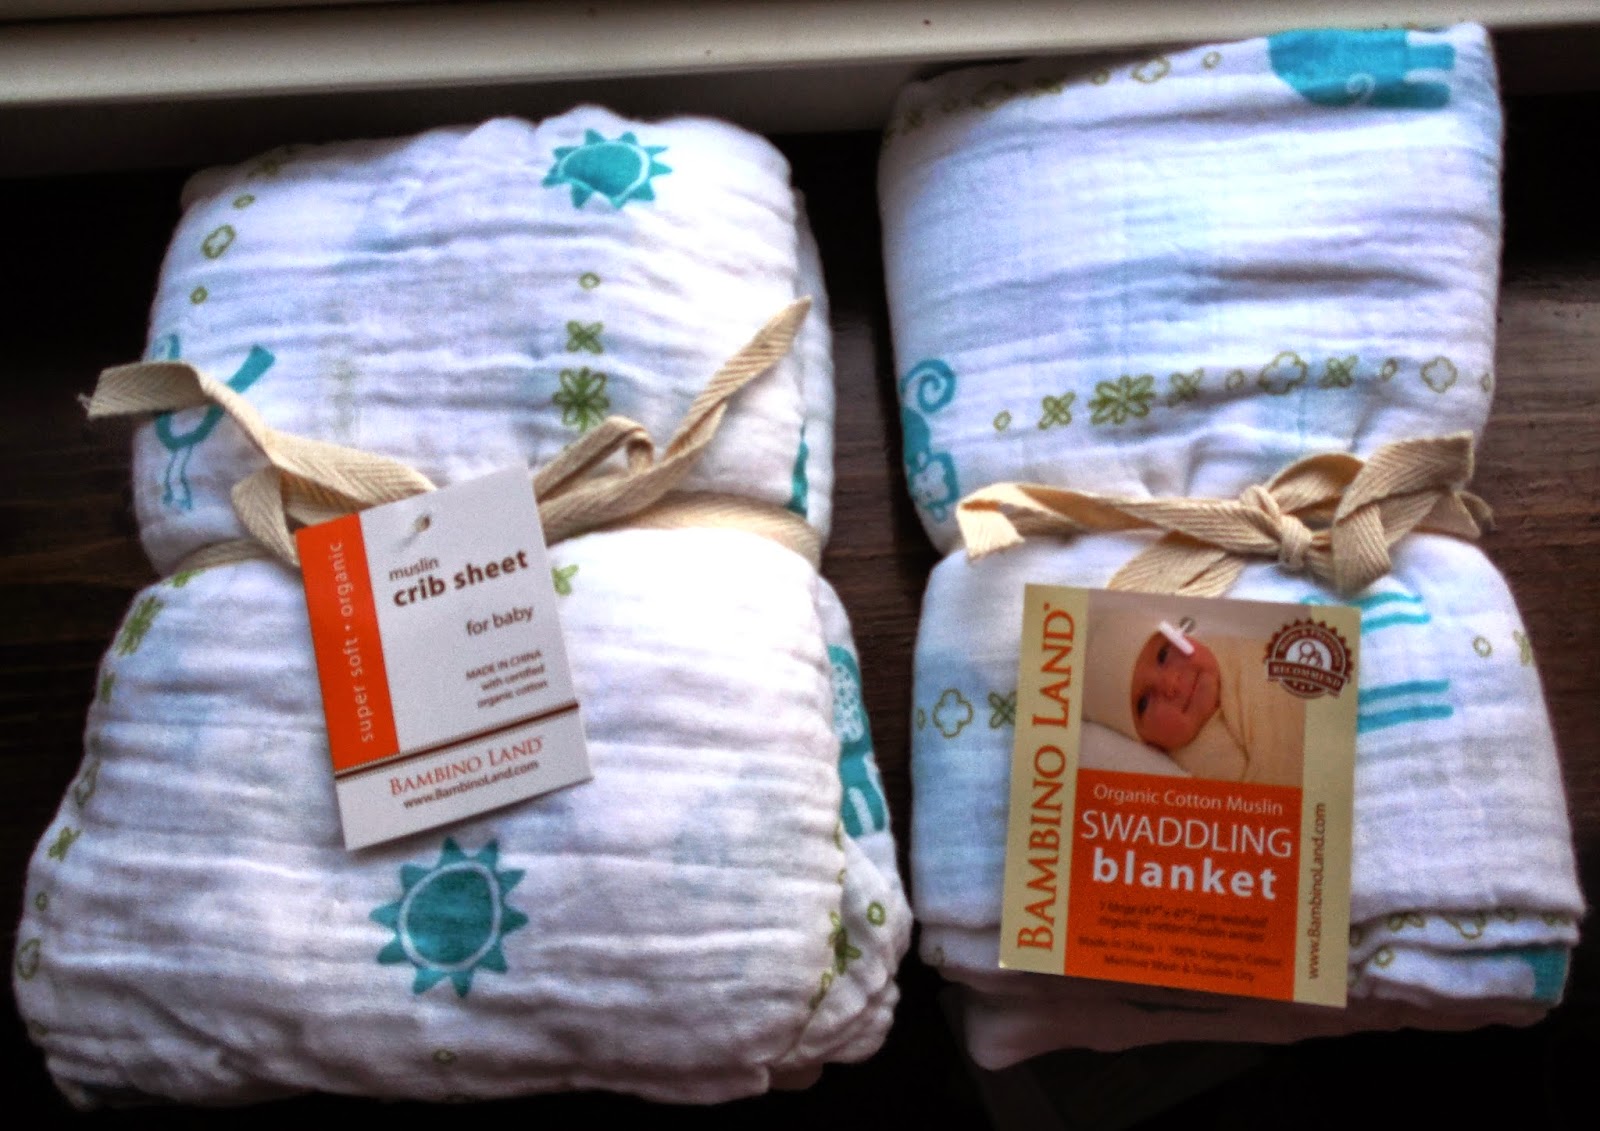 Bambino Land Swaddling Blanket and Crib sheet